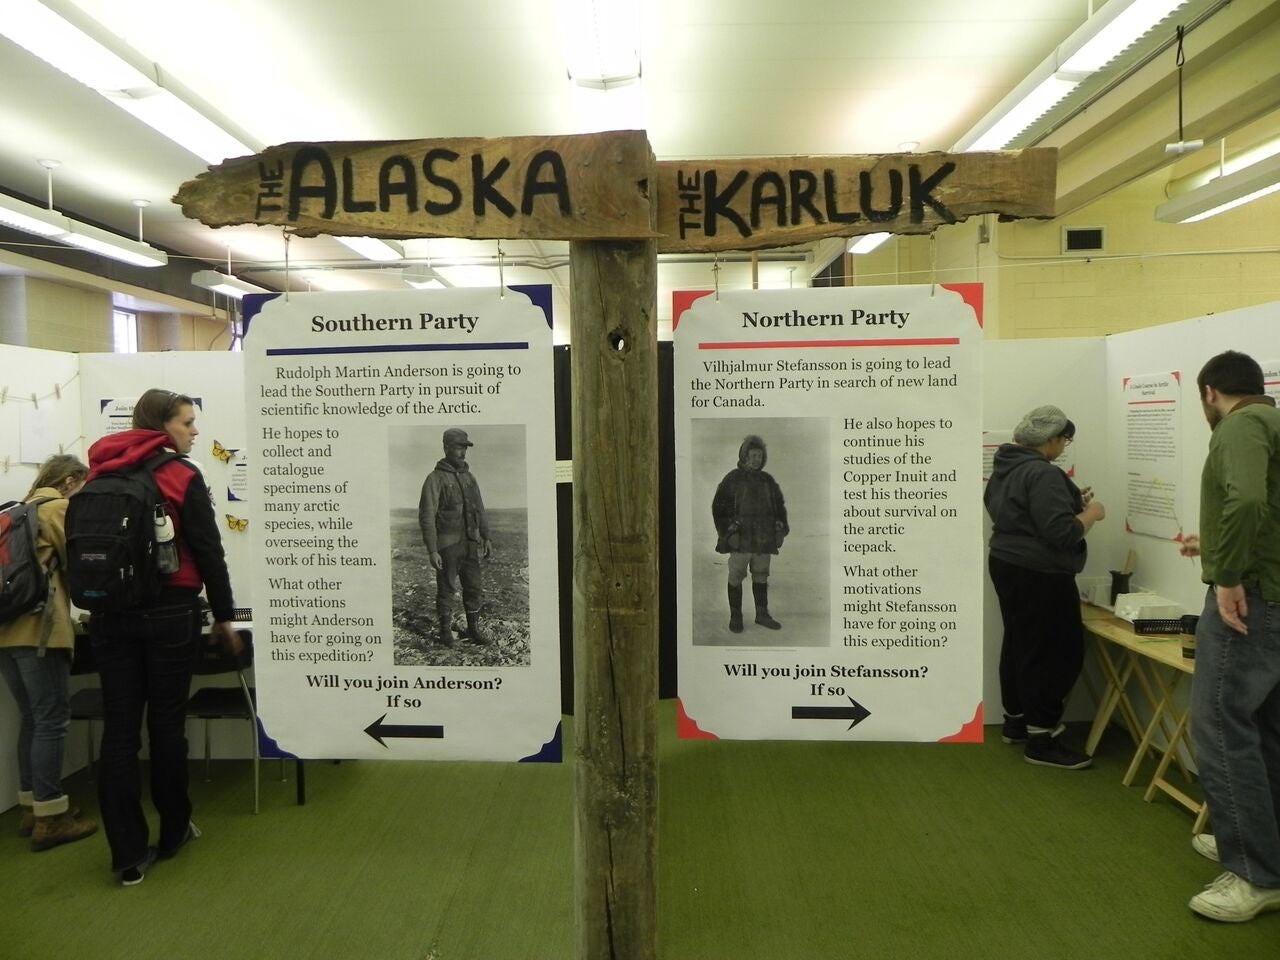 Signs pointing to Alaska and Karluk